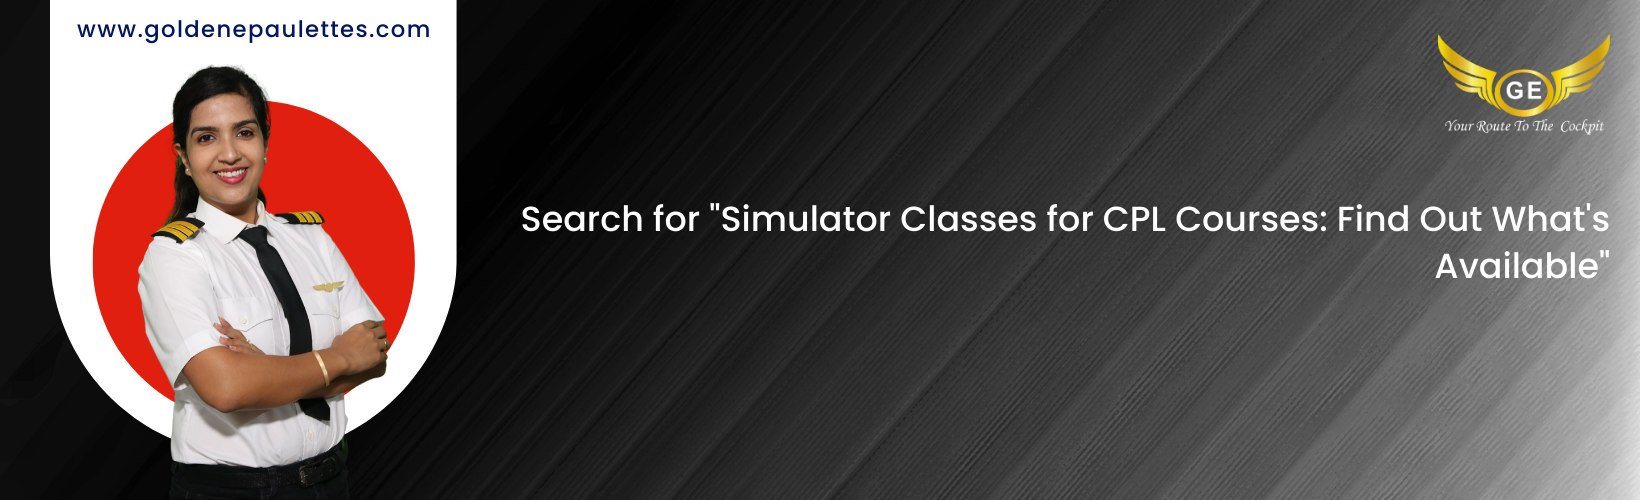 Test Series for Simulator Classes